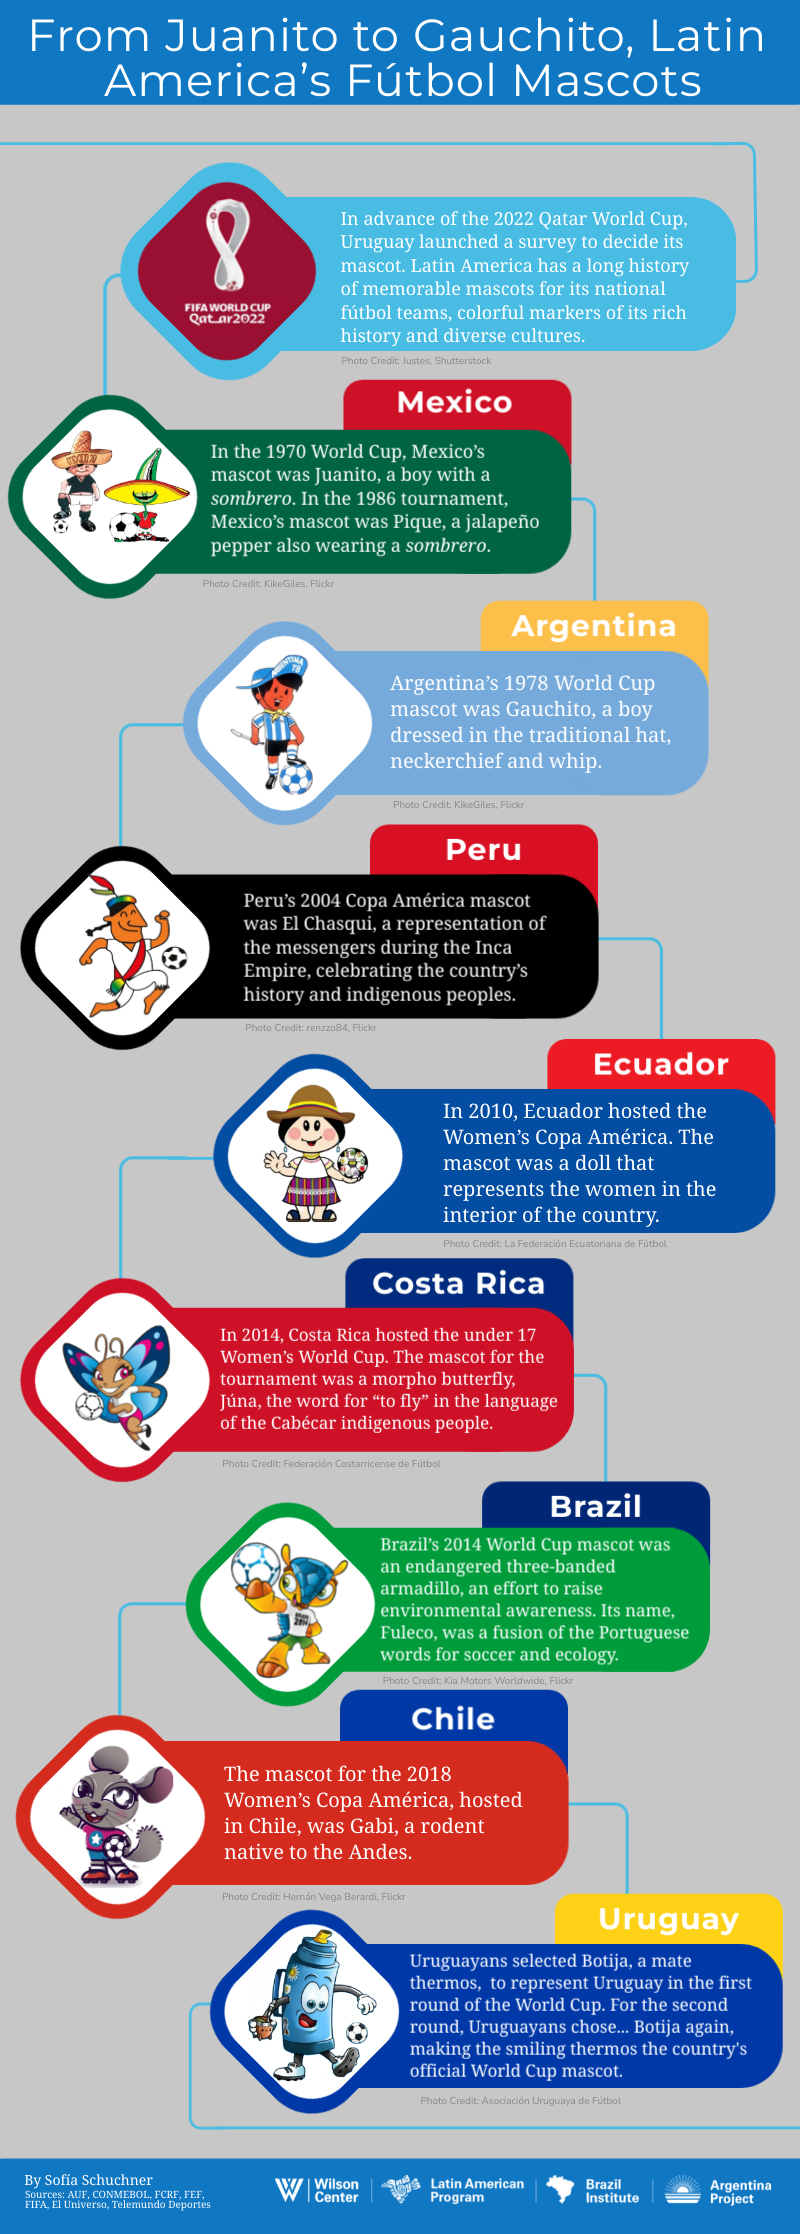 From Juanito to Gauchito, Latin America’s Fútbol Mascots